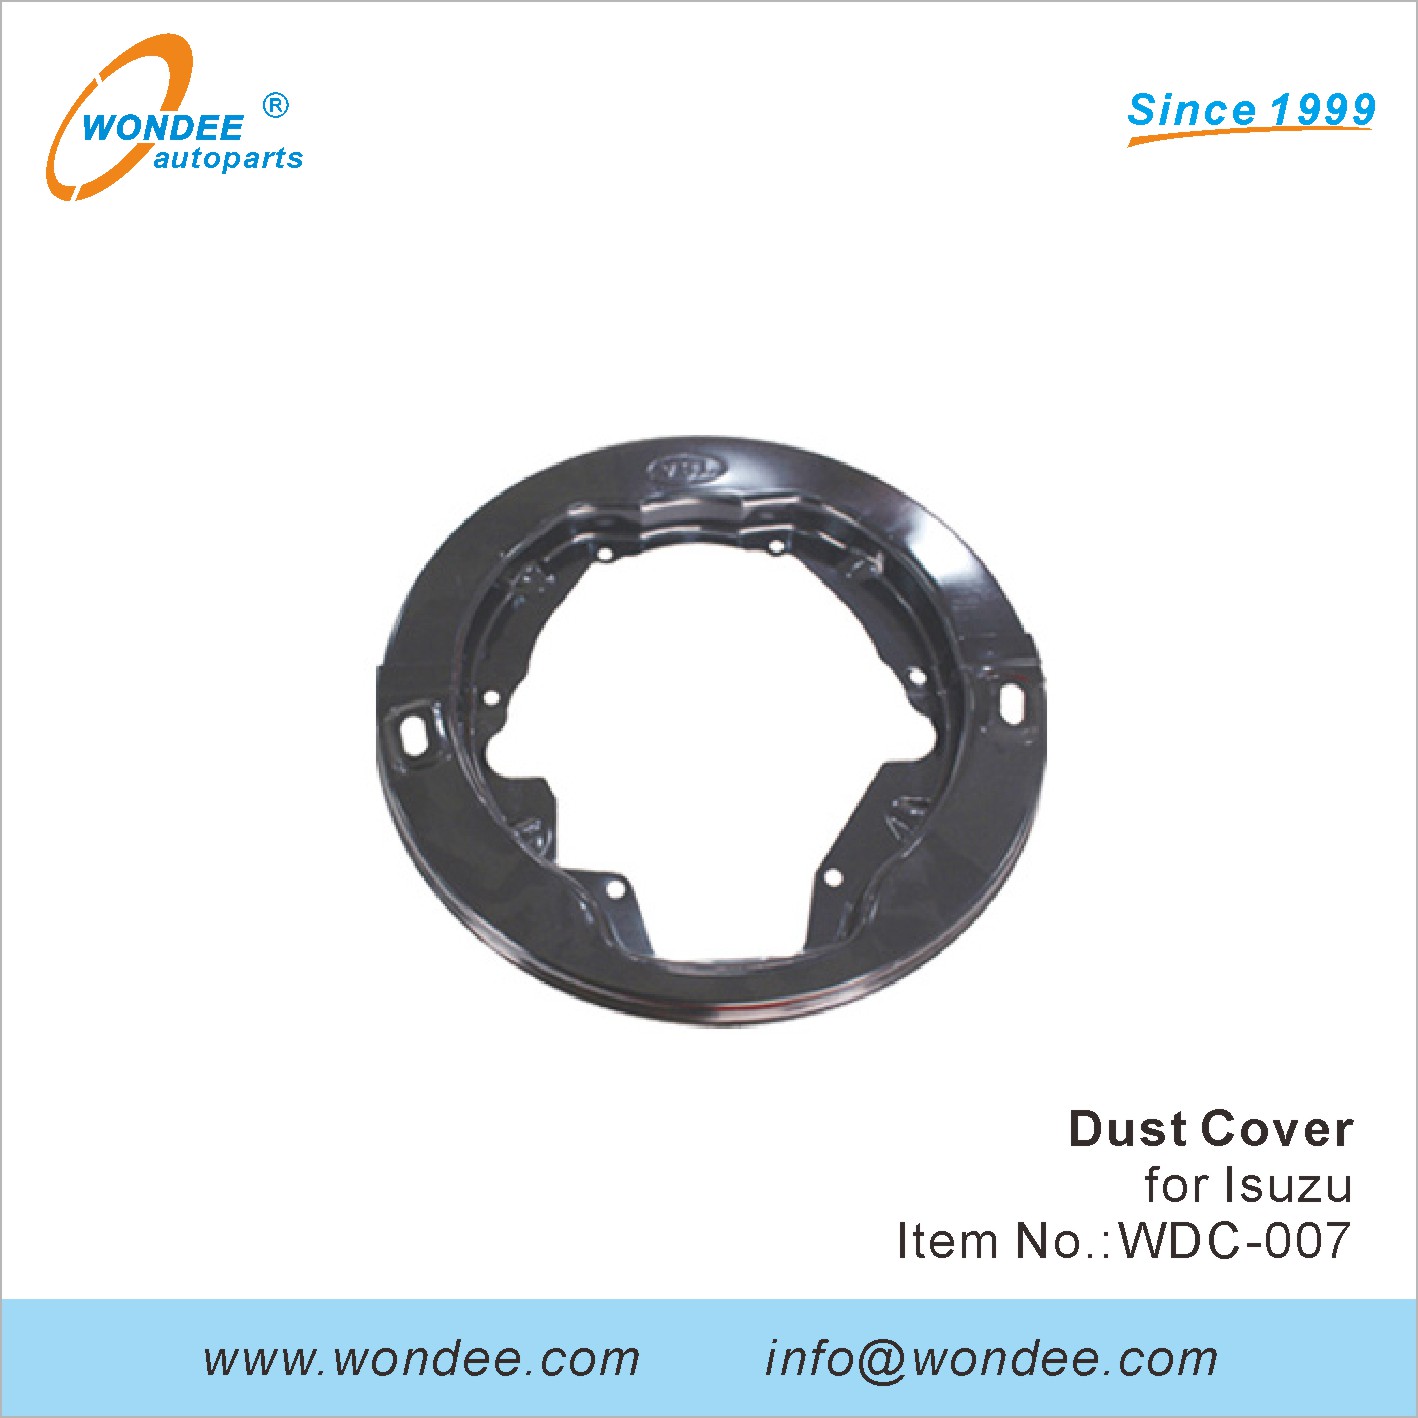 WONDEE dust cover (7)